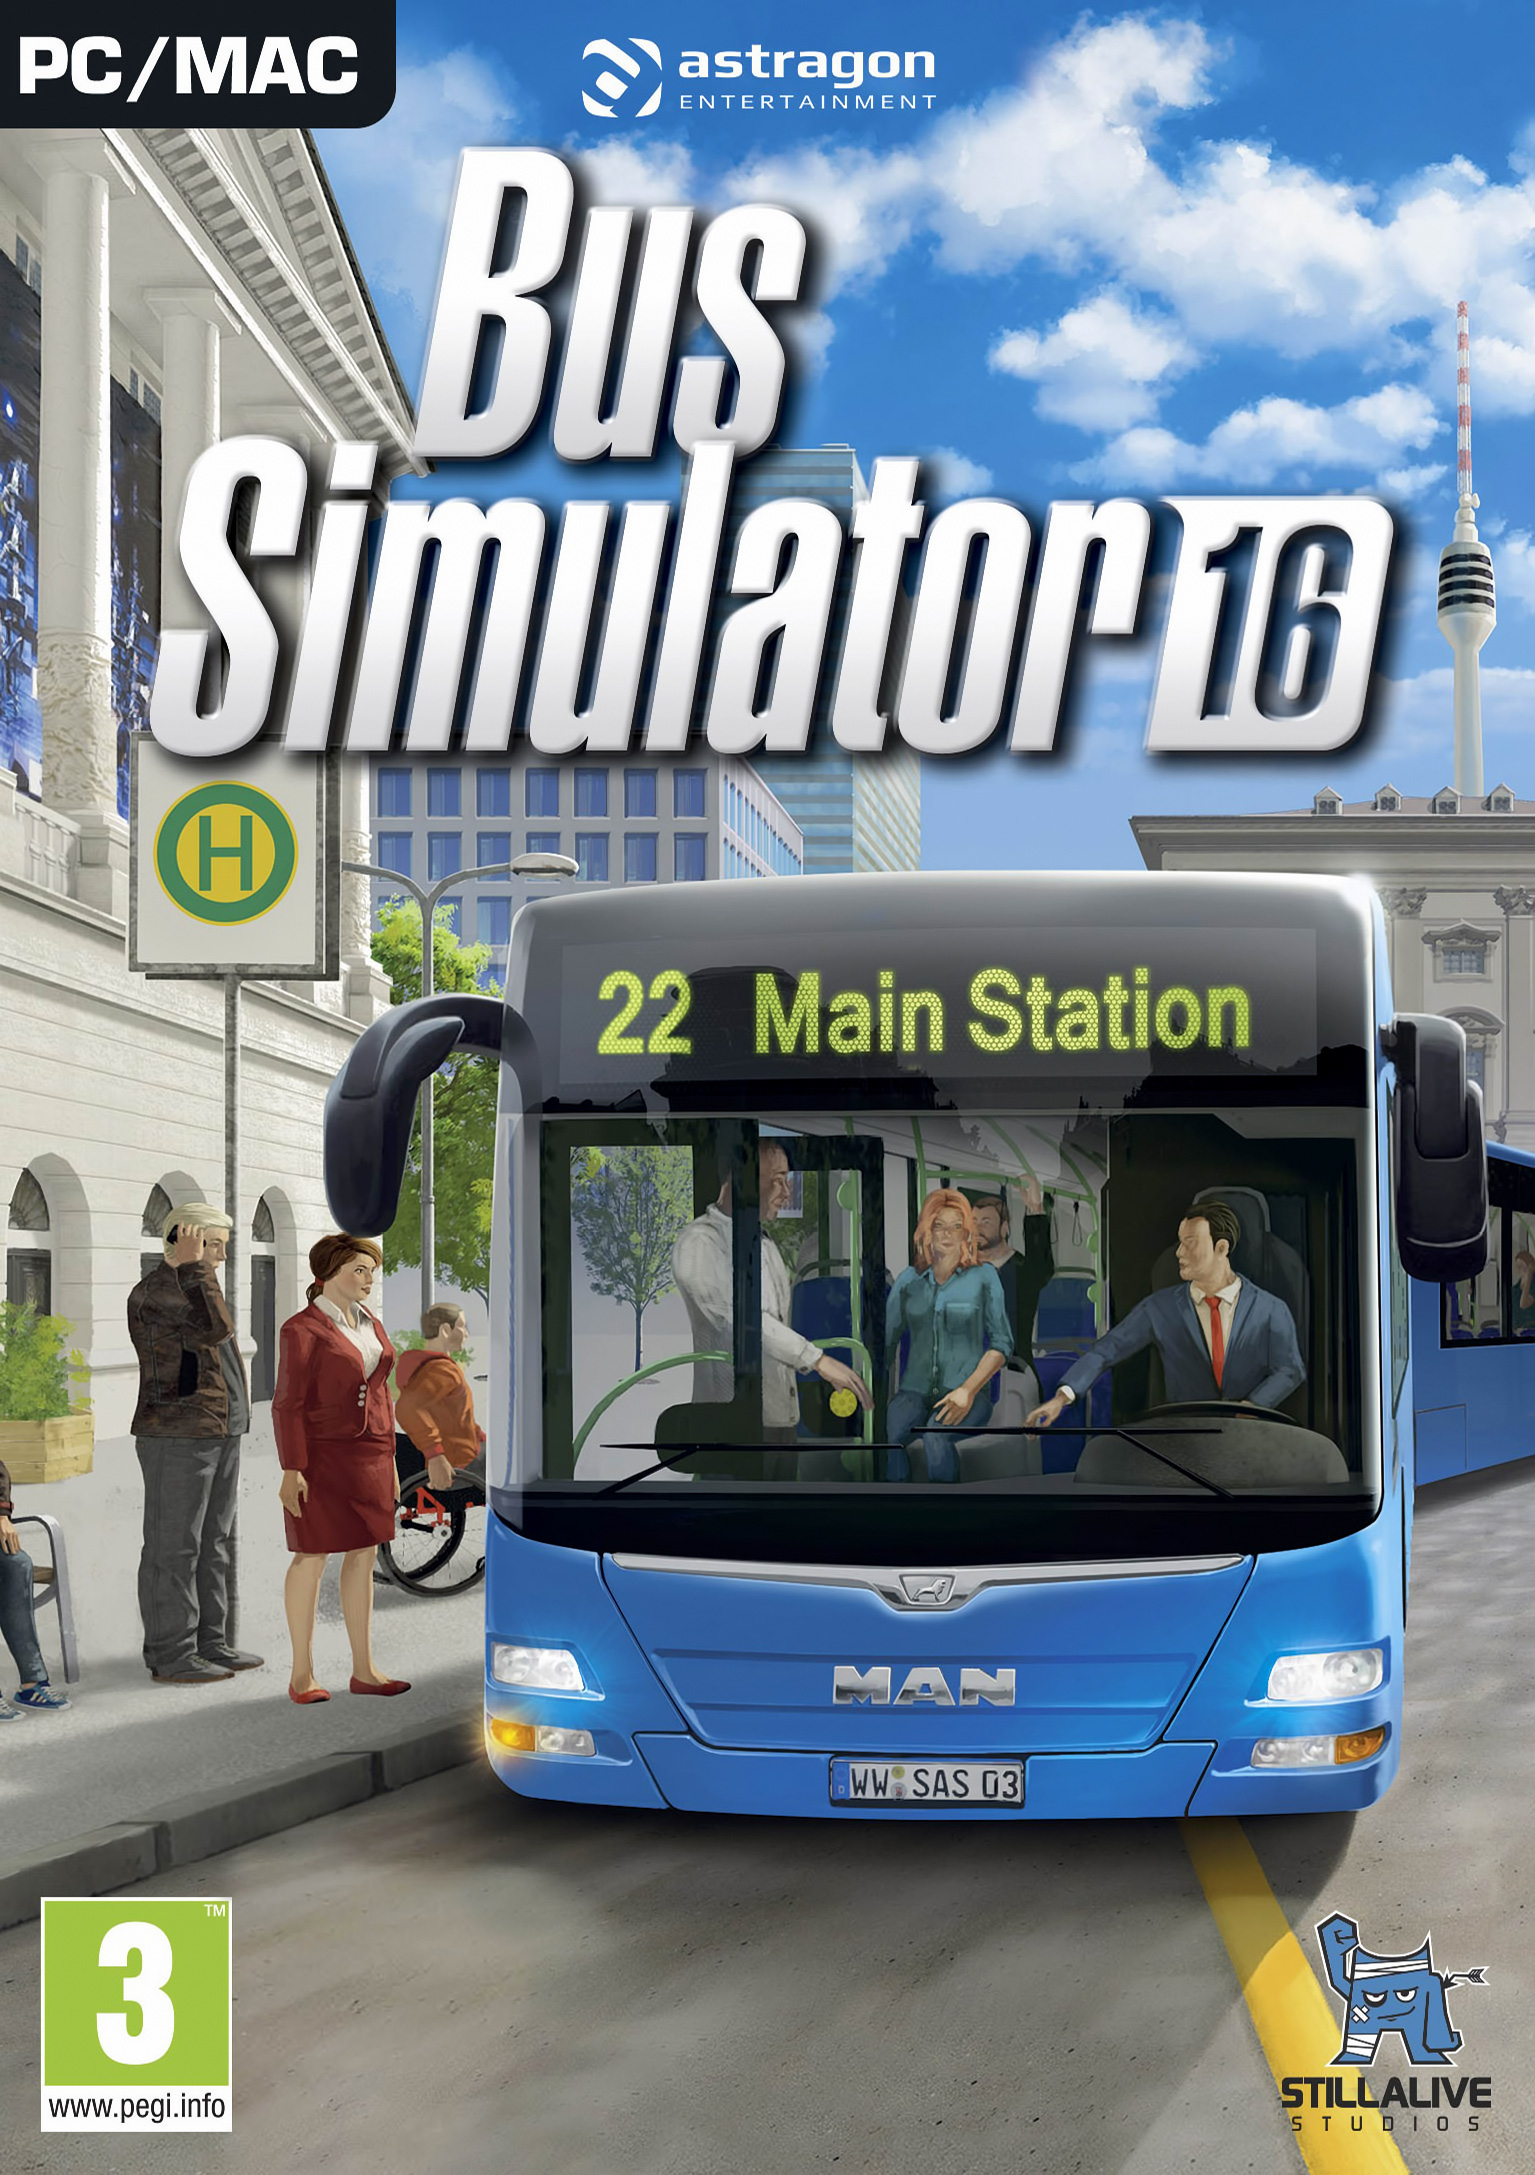 Bus Simulator 16 - predn DVD obal